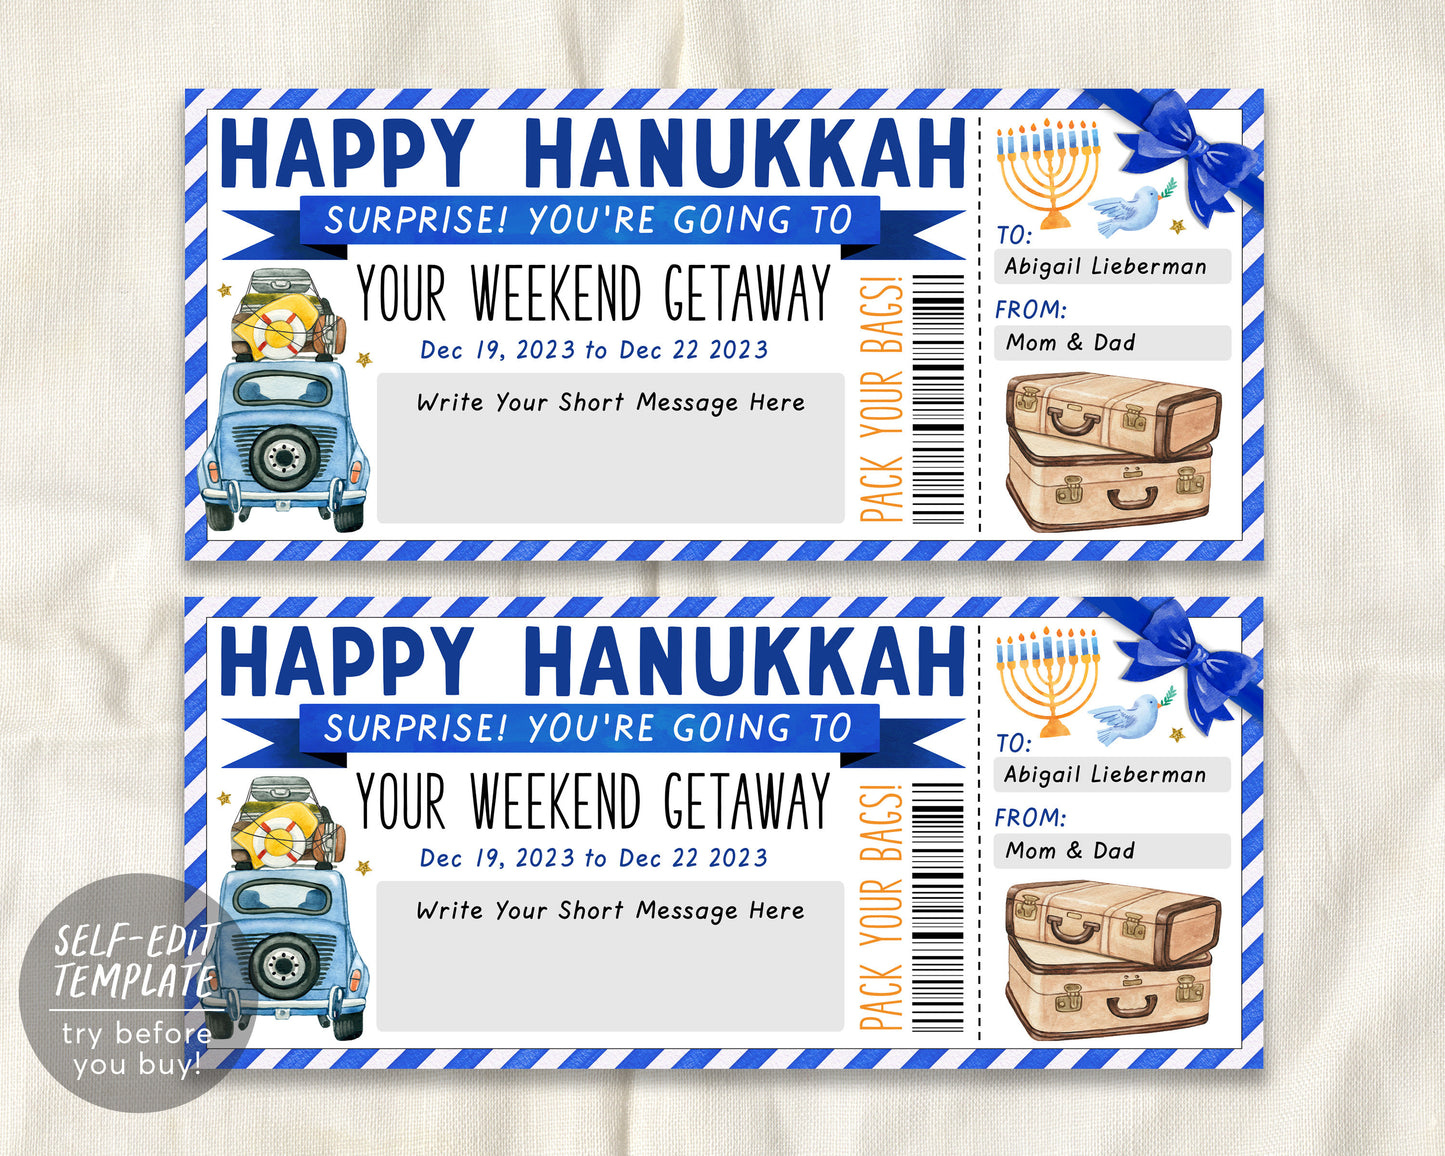 Happy Hanukkah Weekend Getaway Voucher Editable Template